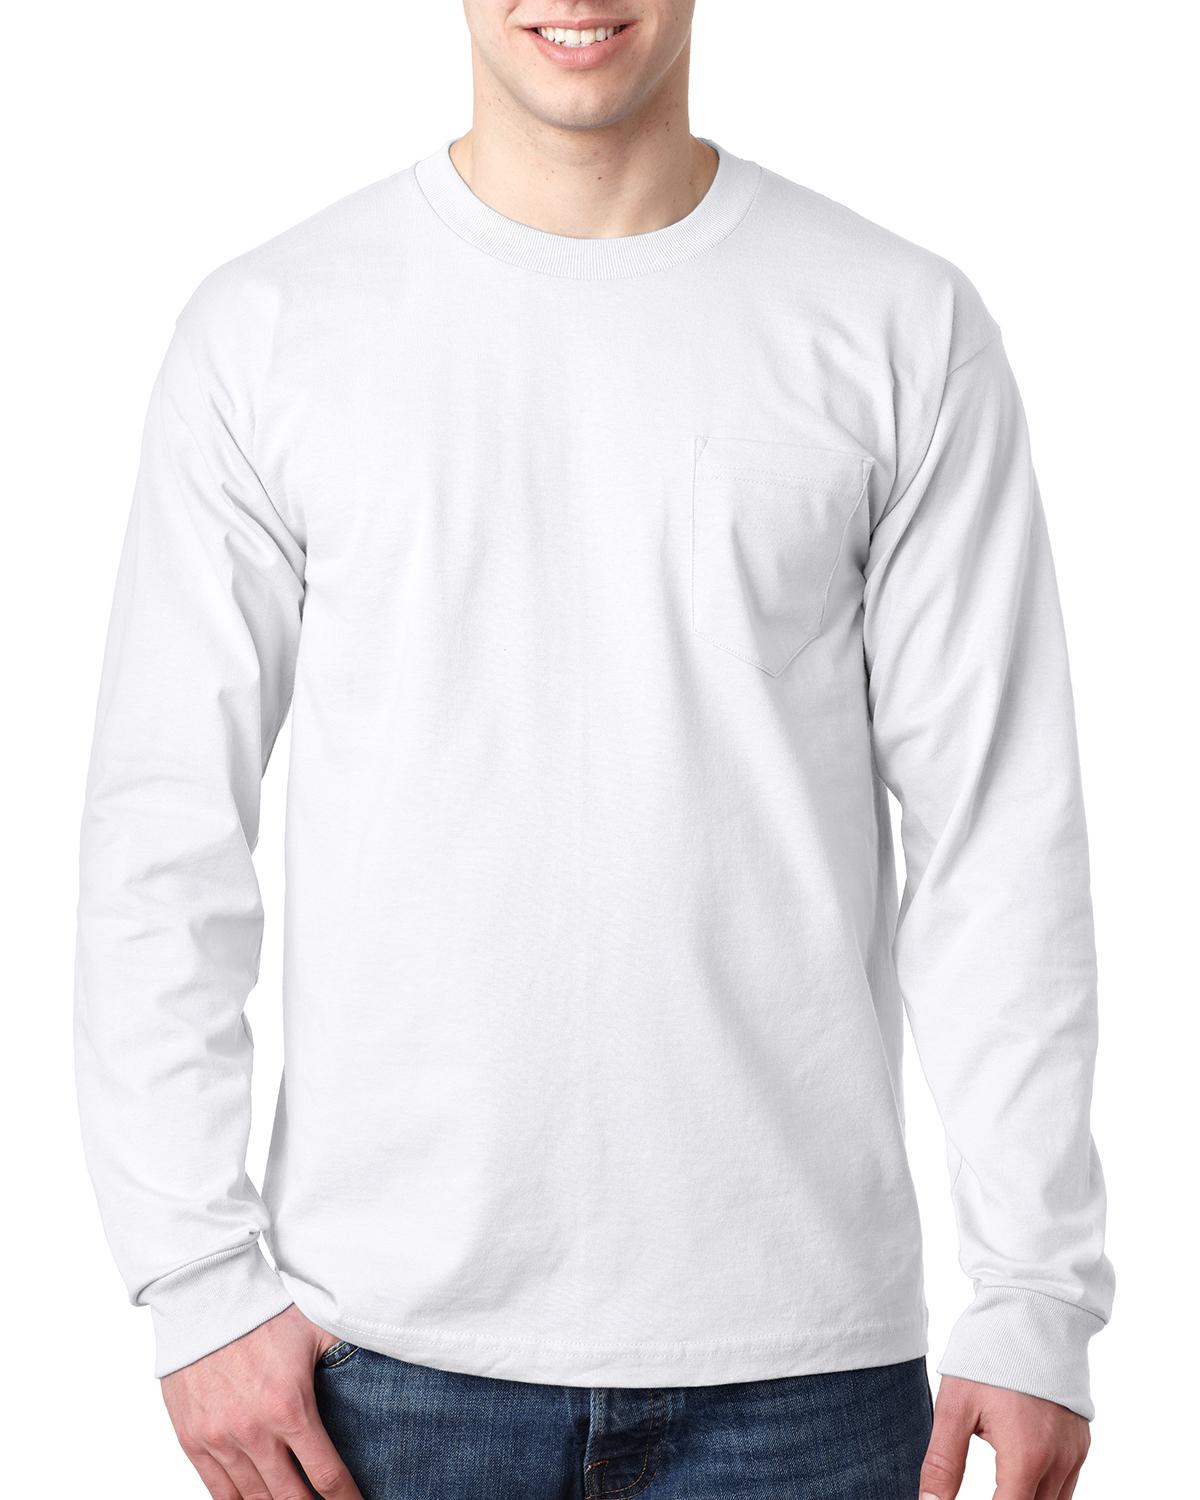 Bayside BA8100 Adult 6.1 oz. 100% Cotton Long Sleeve Pocket T-Shirt ...